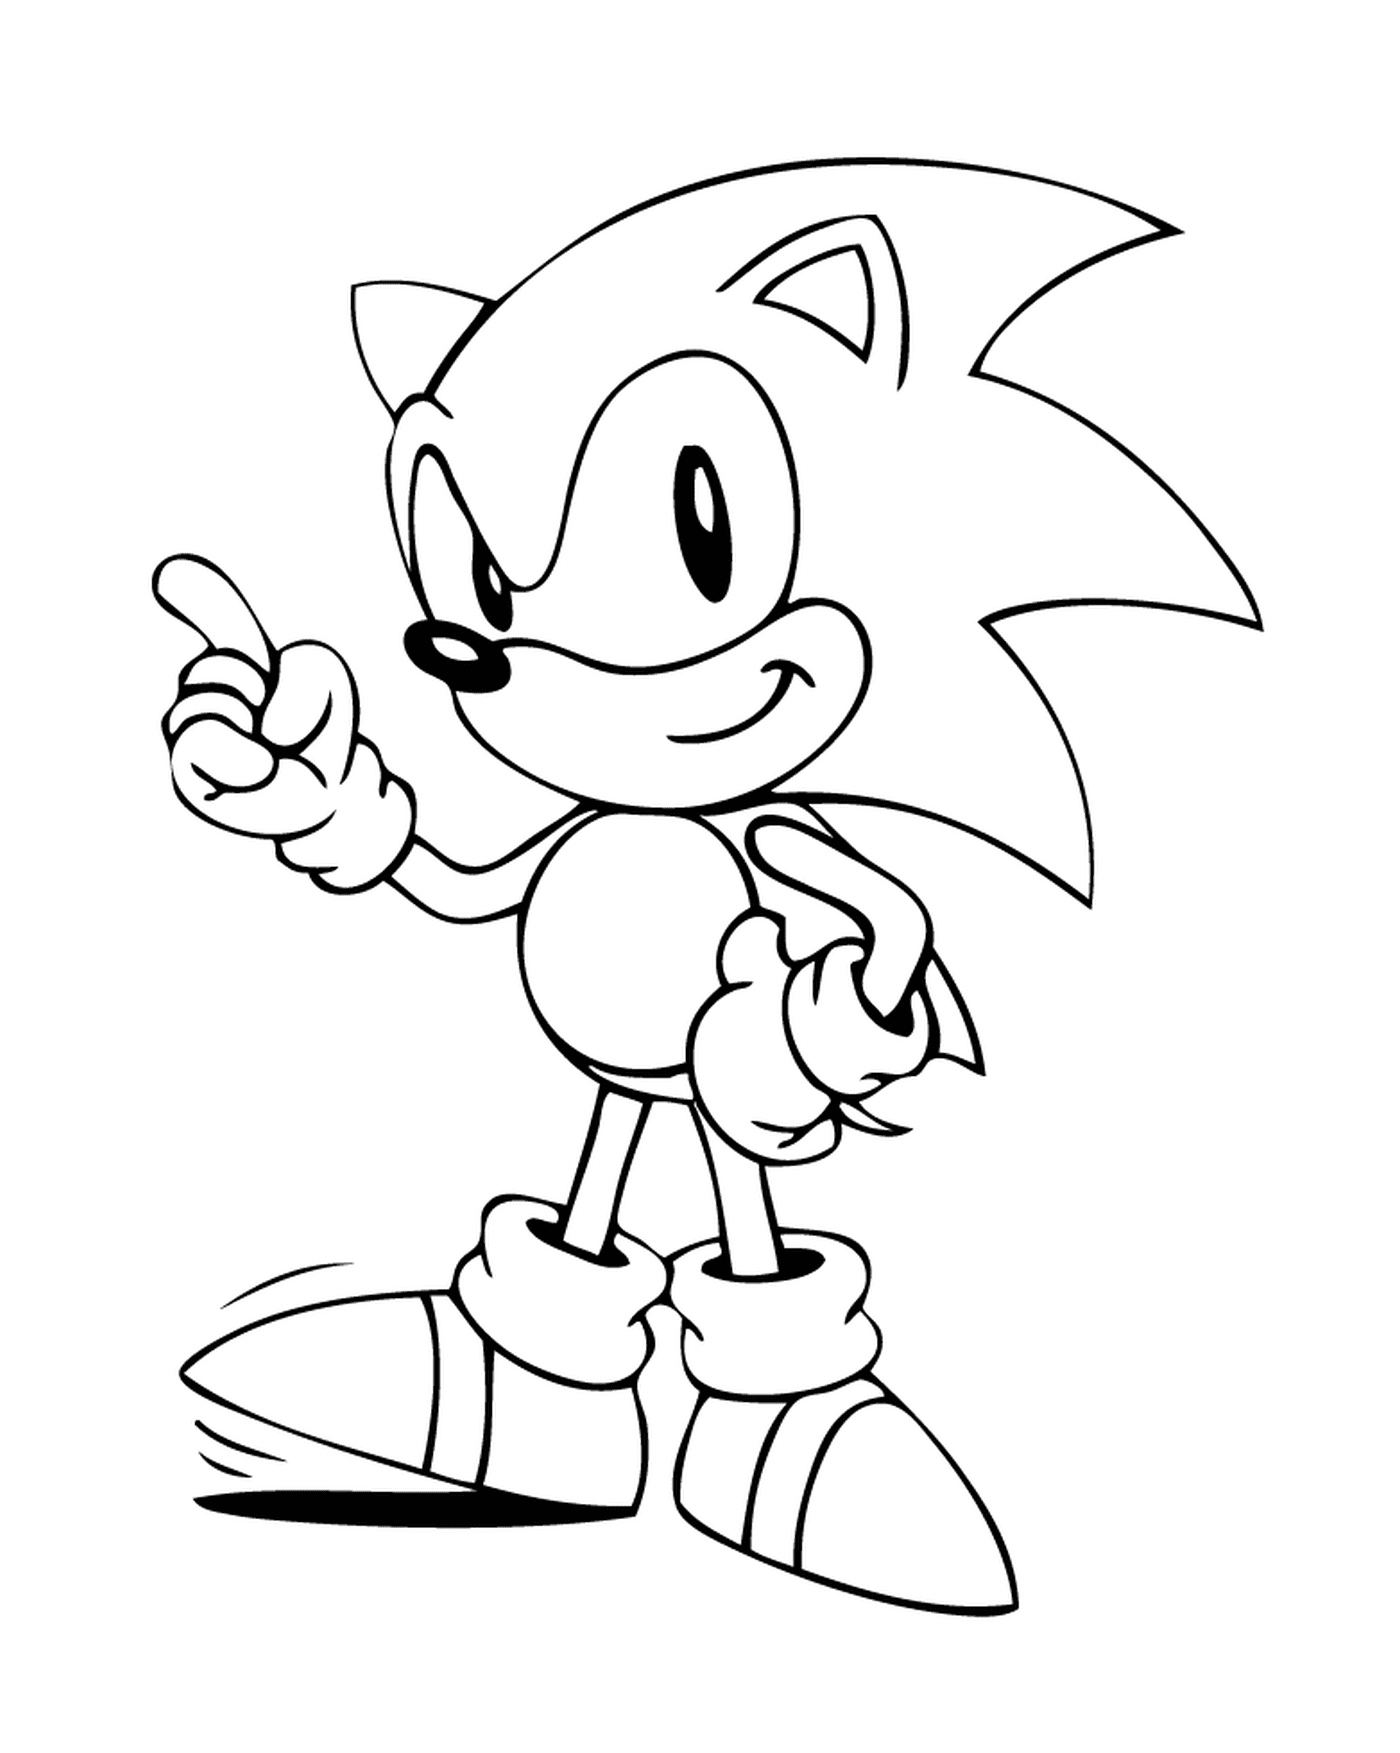  Sonic pronto para correr rápido 